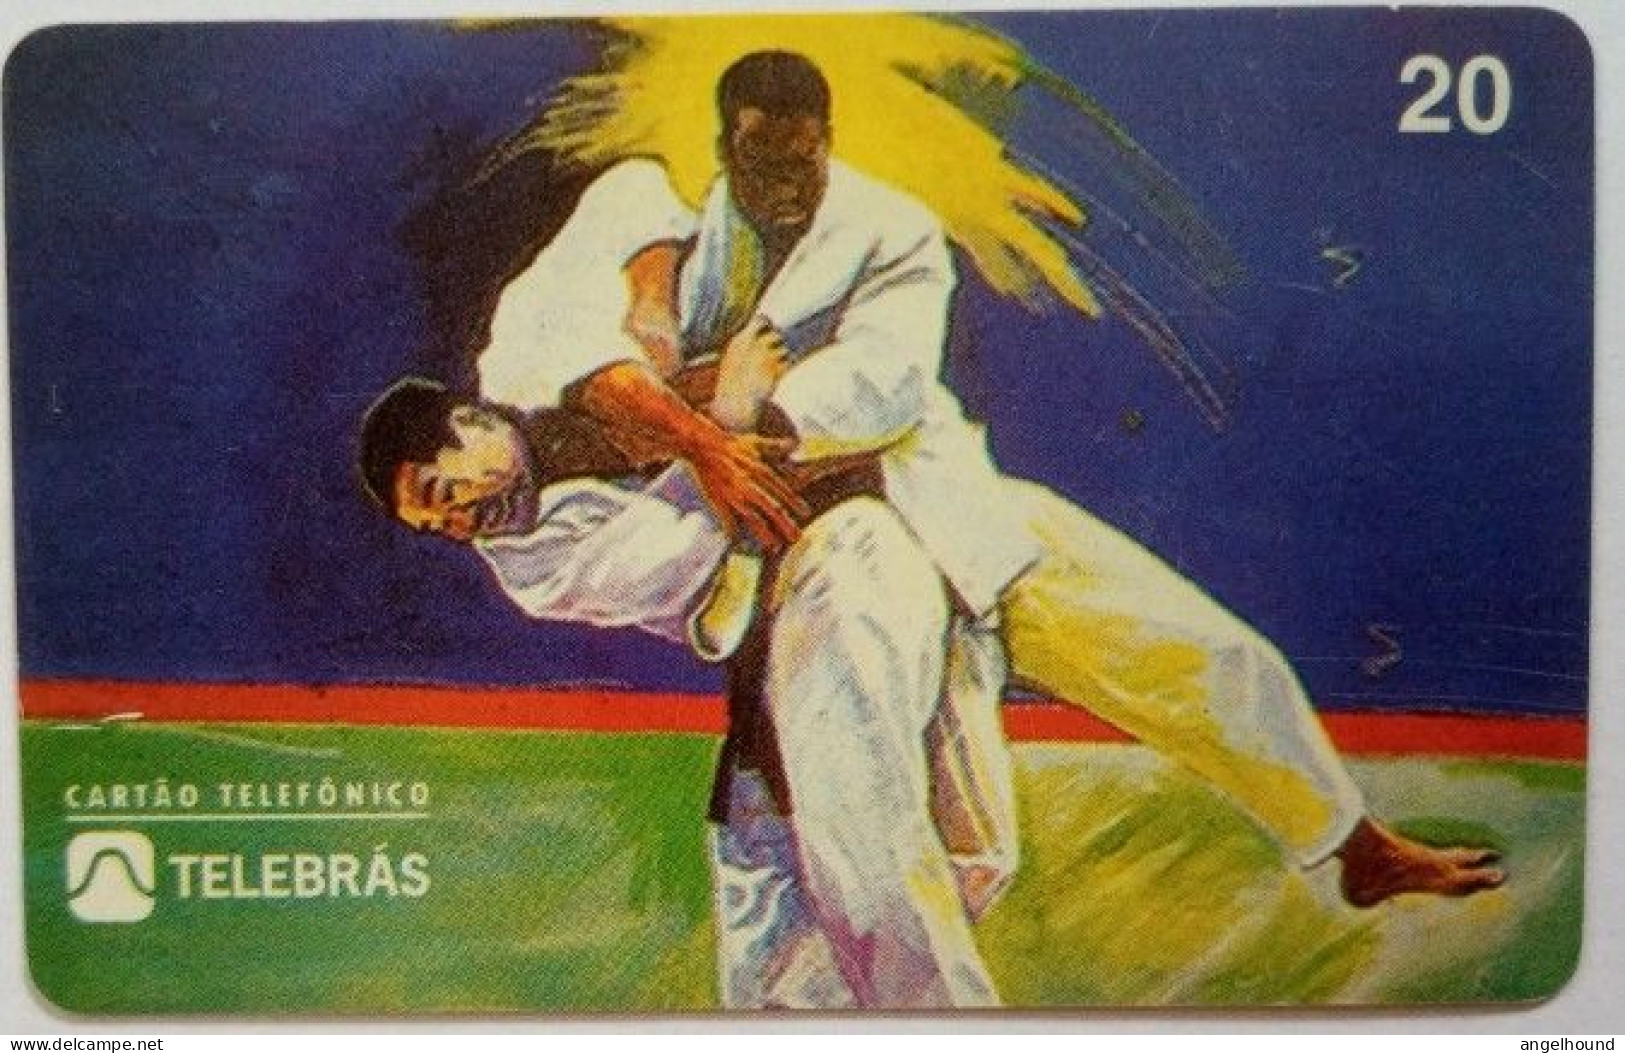 Brazil 20 Units - Judo - Brésil